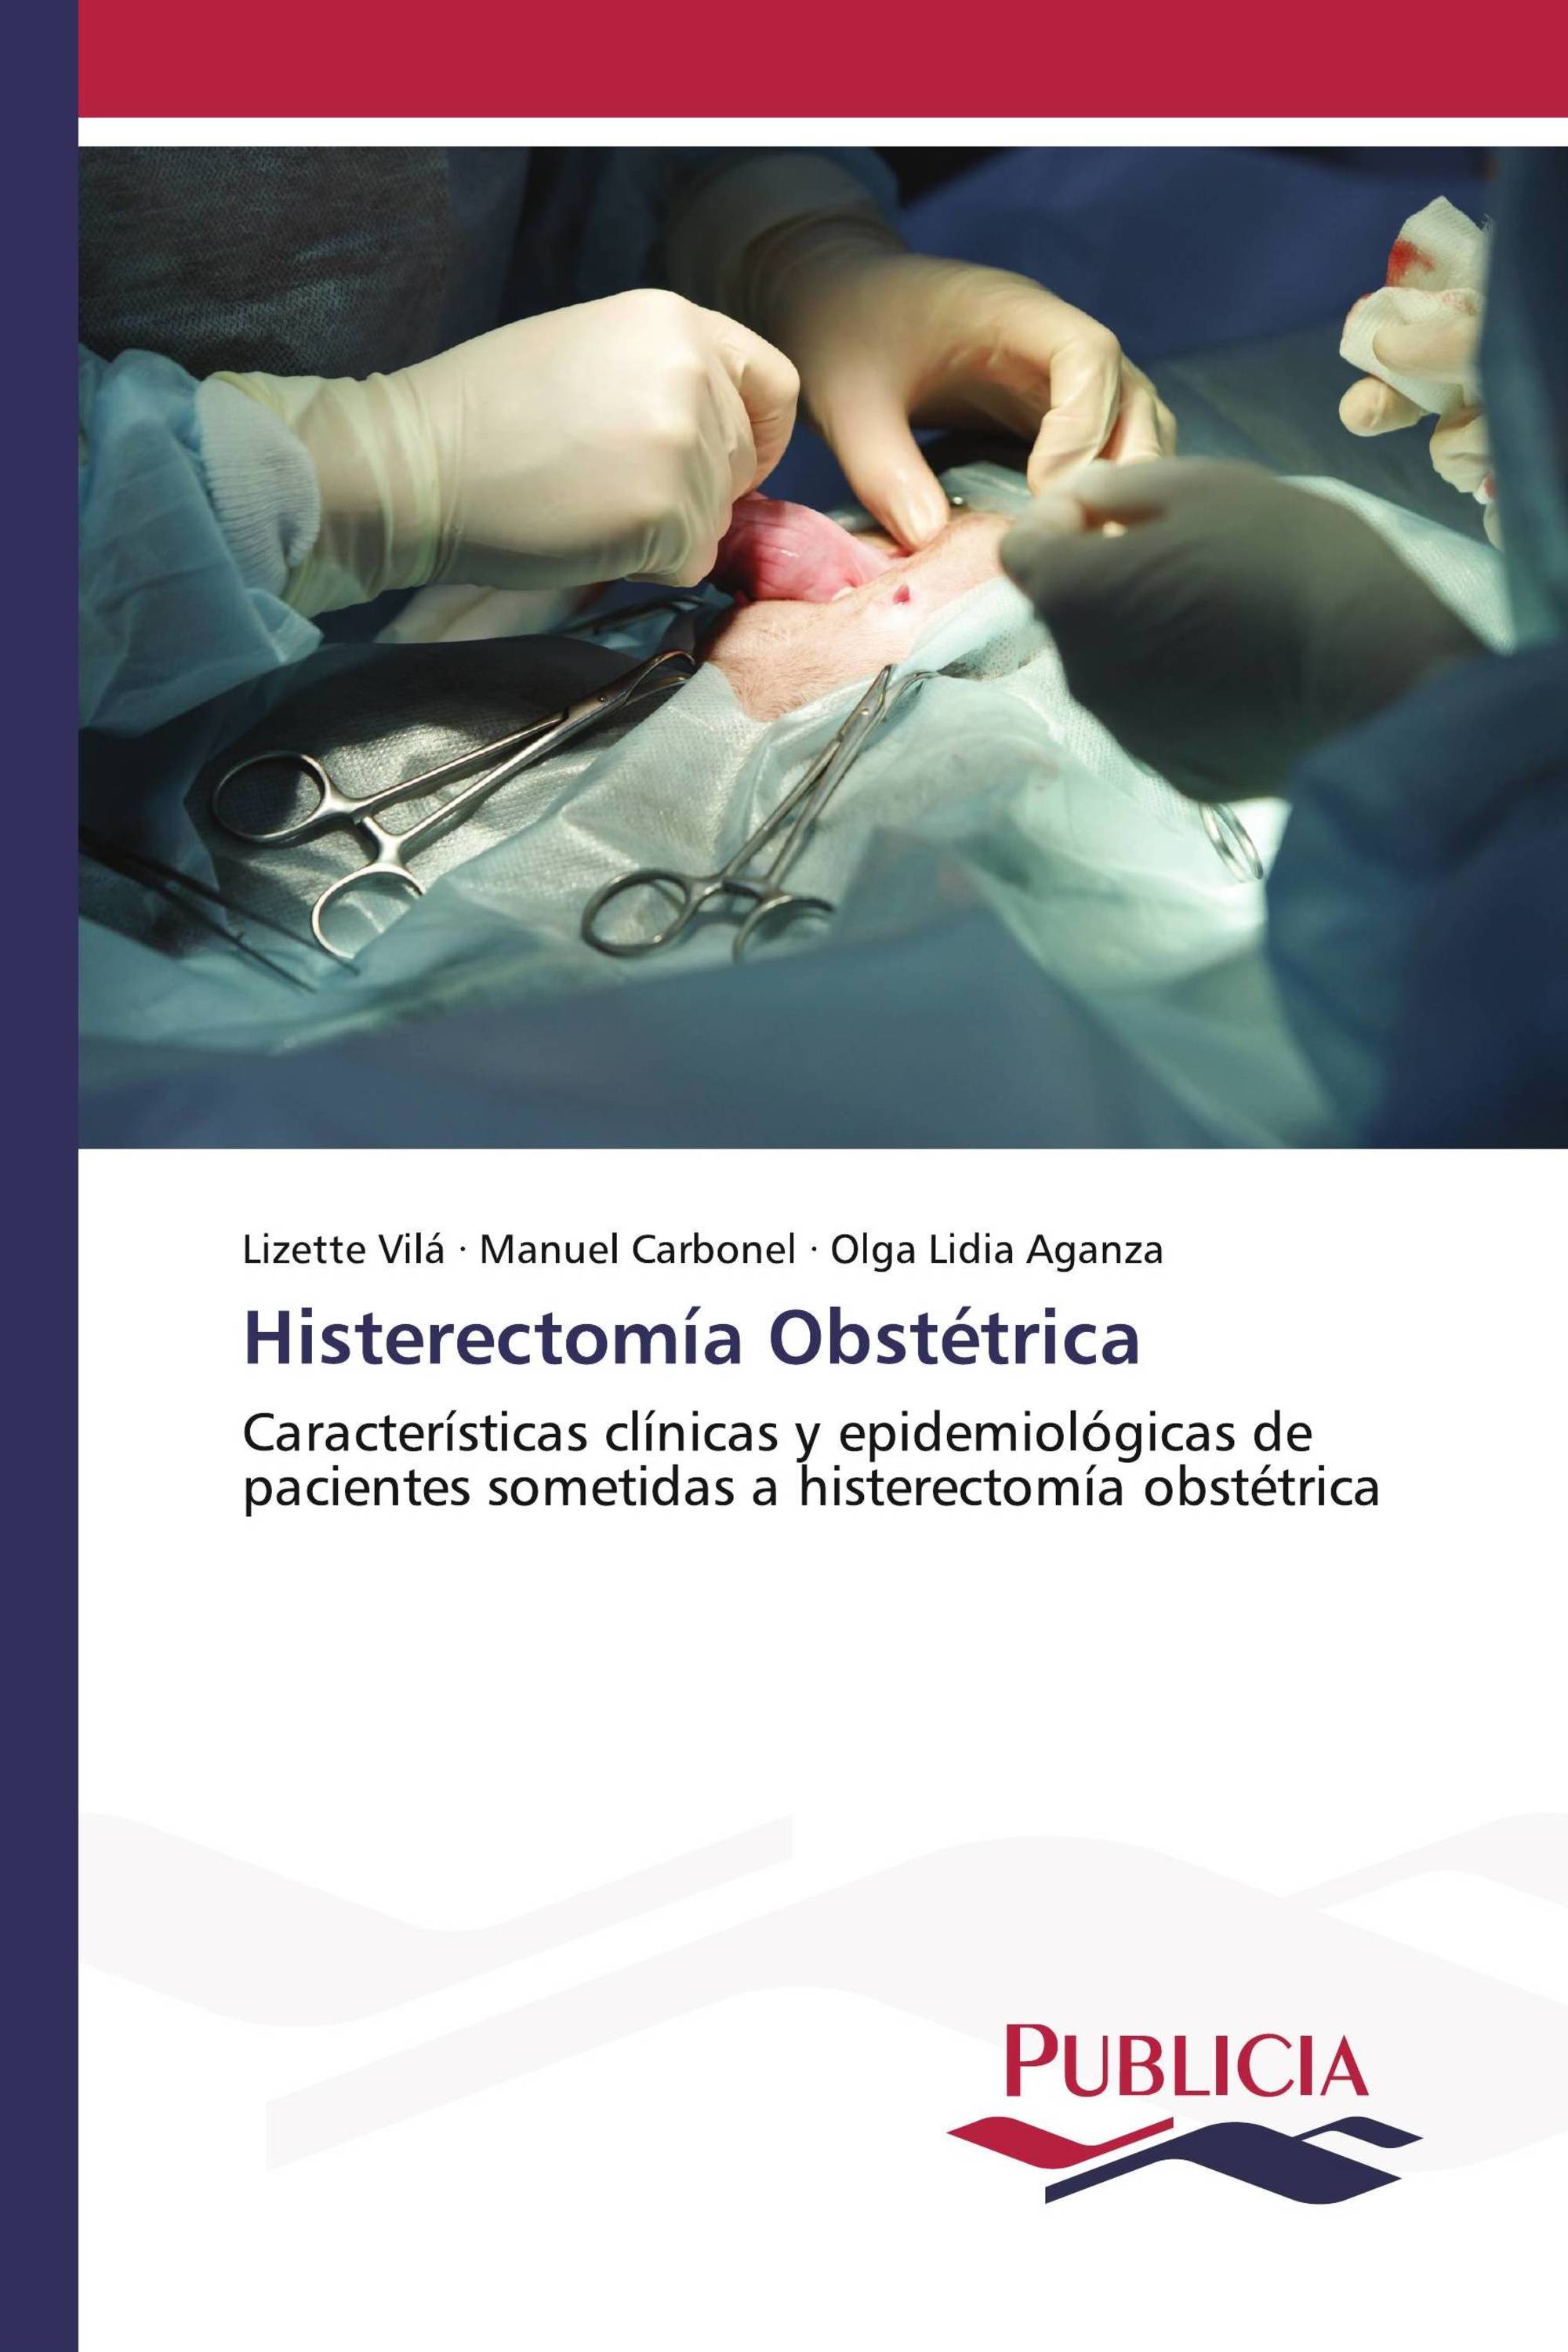 Histerectomía Obstétrica